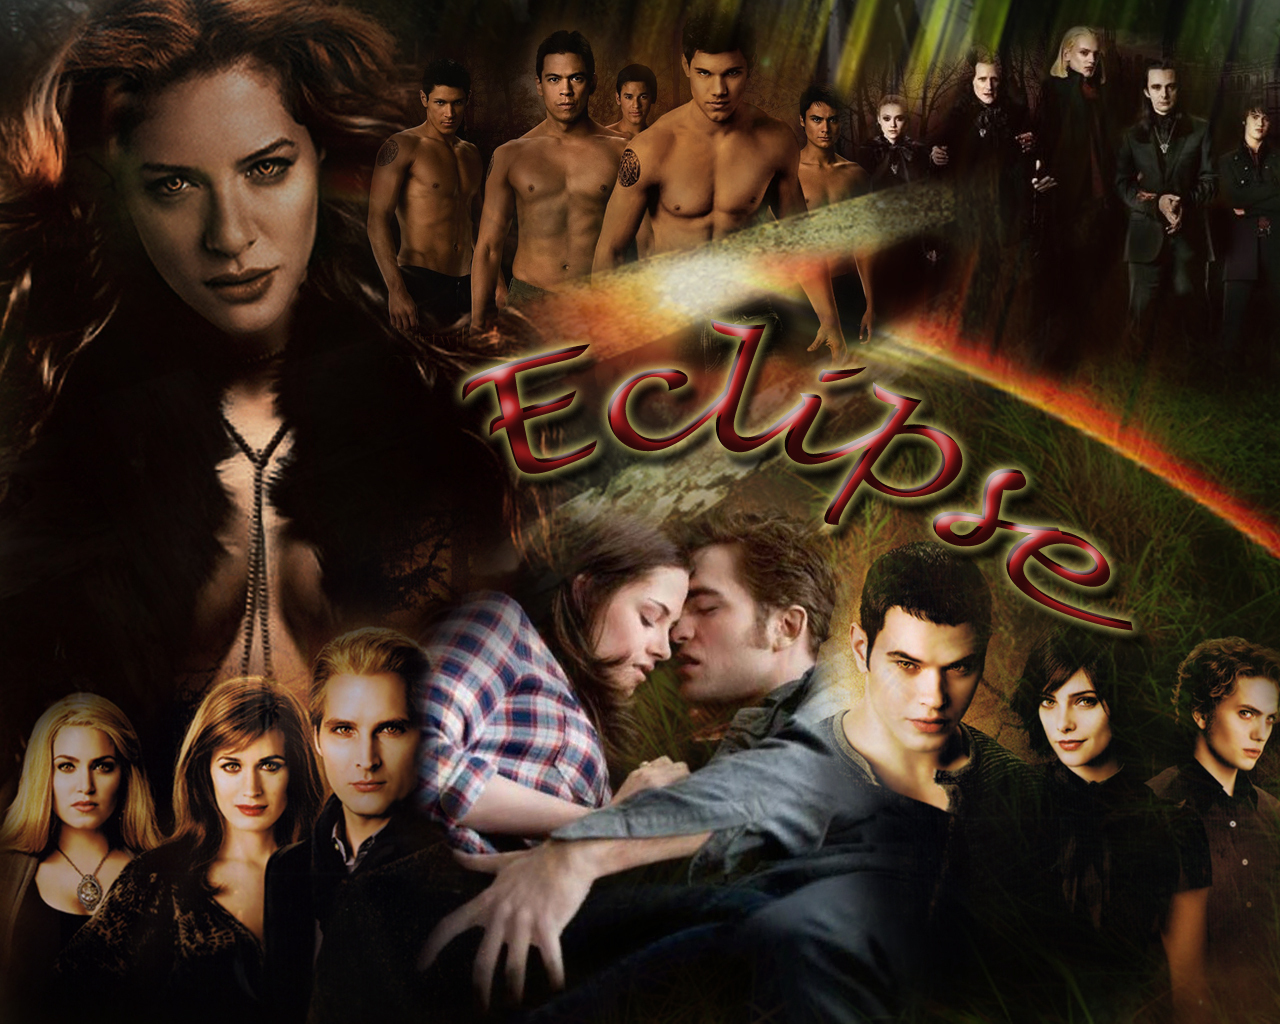 Twilight Saga Eclipse Wallpaper